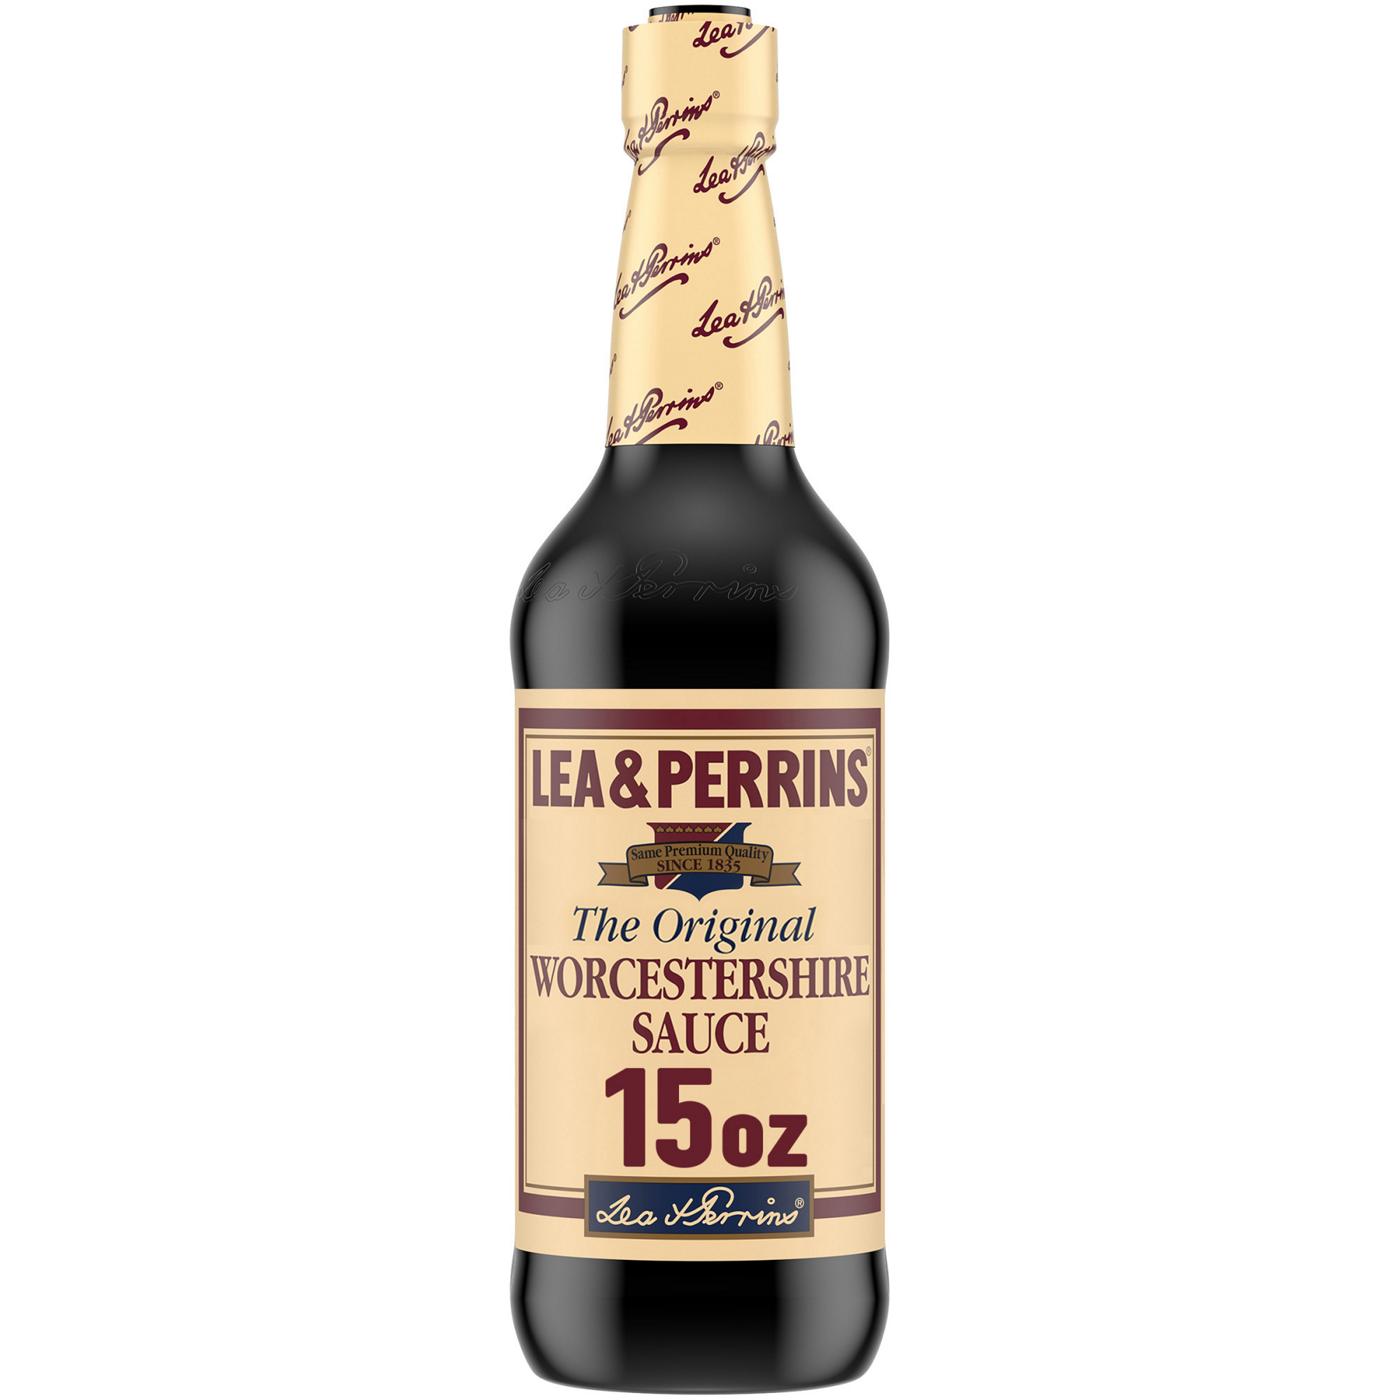 Lea & Perrins Original Worcestershire Sauce; image 1 of 9